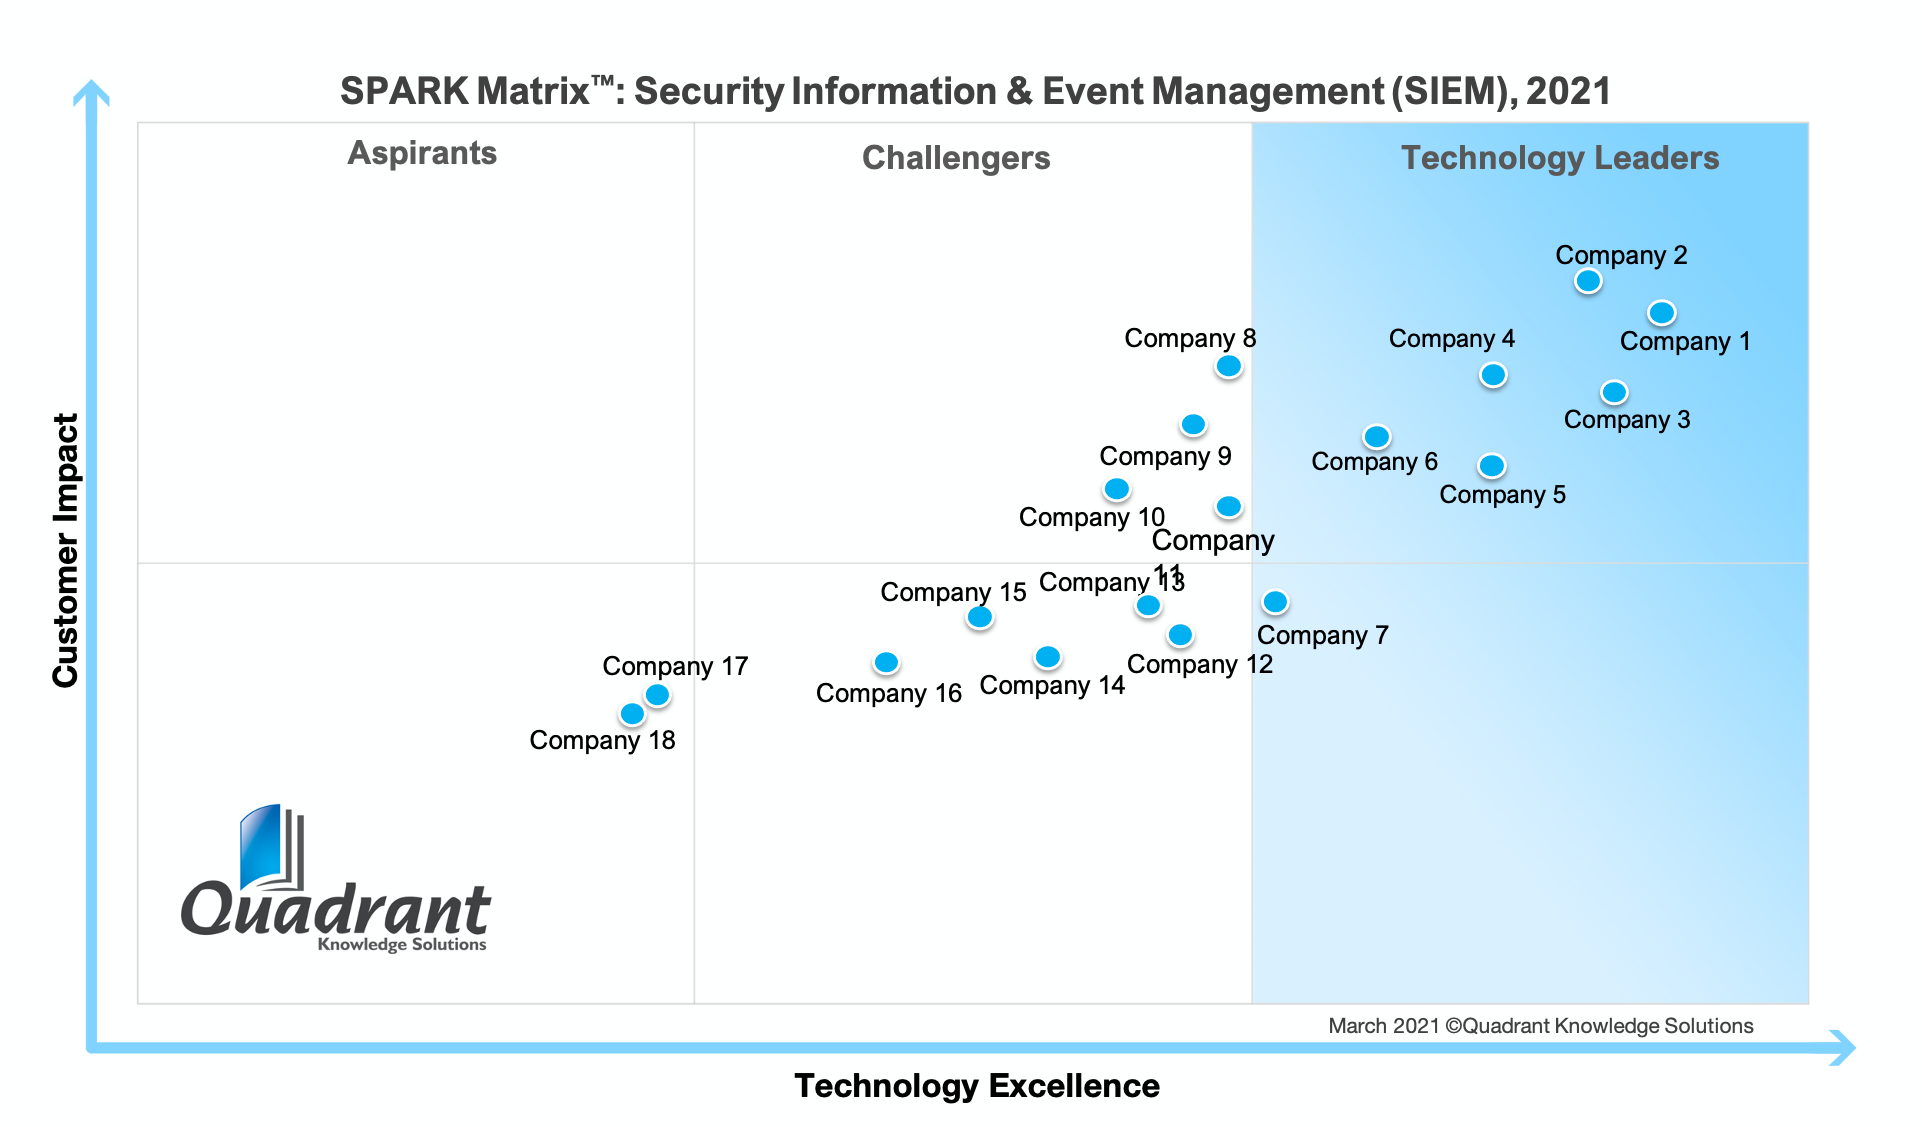 SPARK Matrix Security Information and Event Management (SIEM) 2021 Quadrant Knowledge Solutions